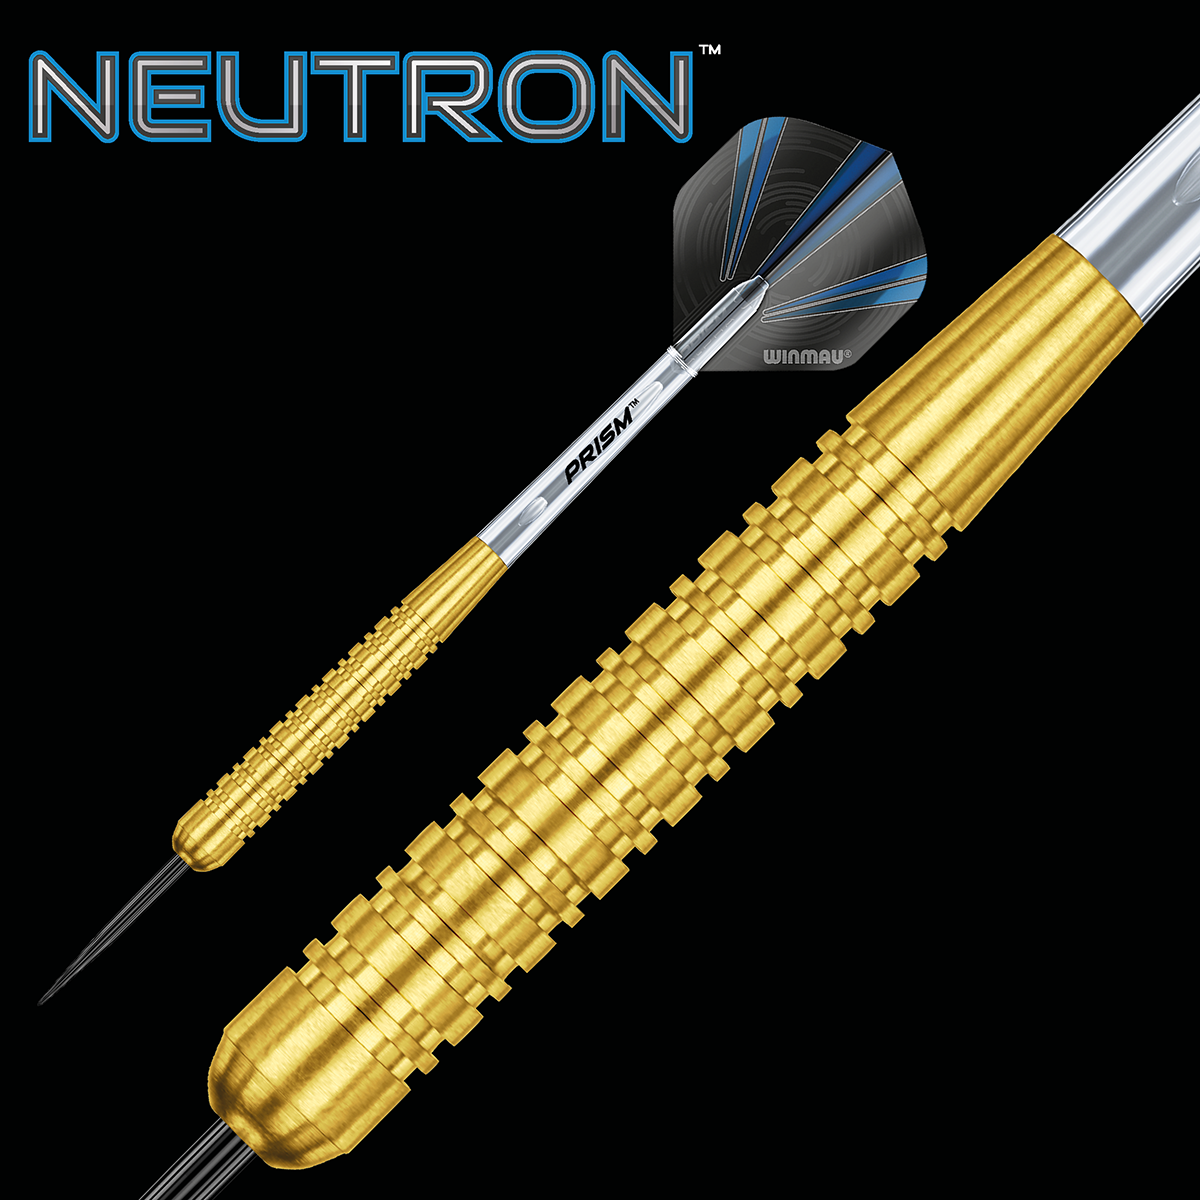 Winmau Neutron Brass Steeltip Darts